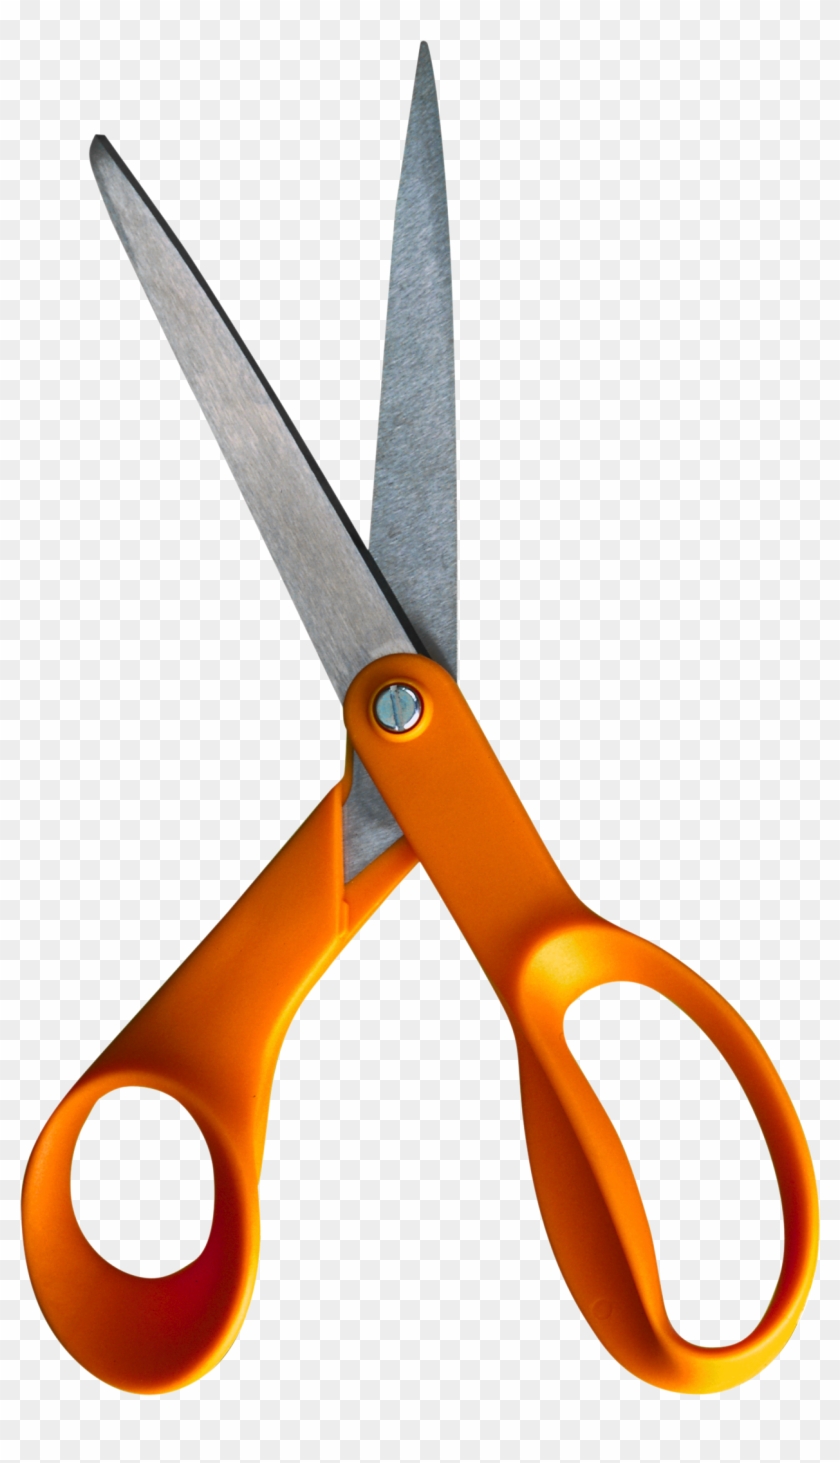 Orange Scissors Png Image Download - Scissors Png #175534